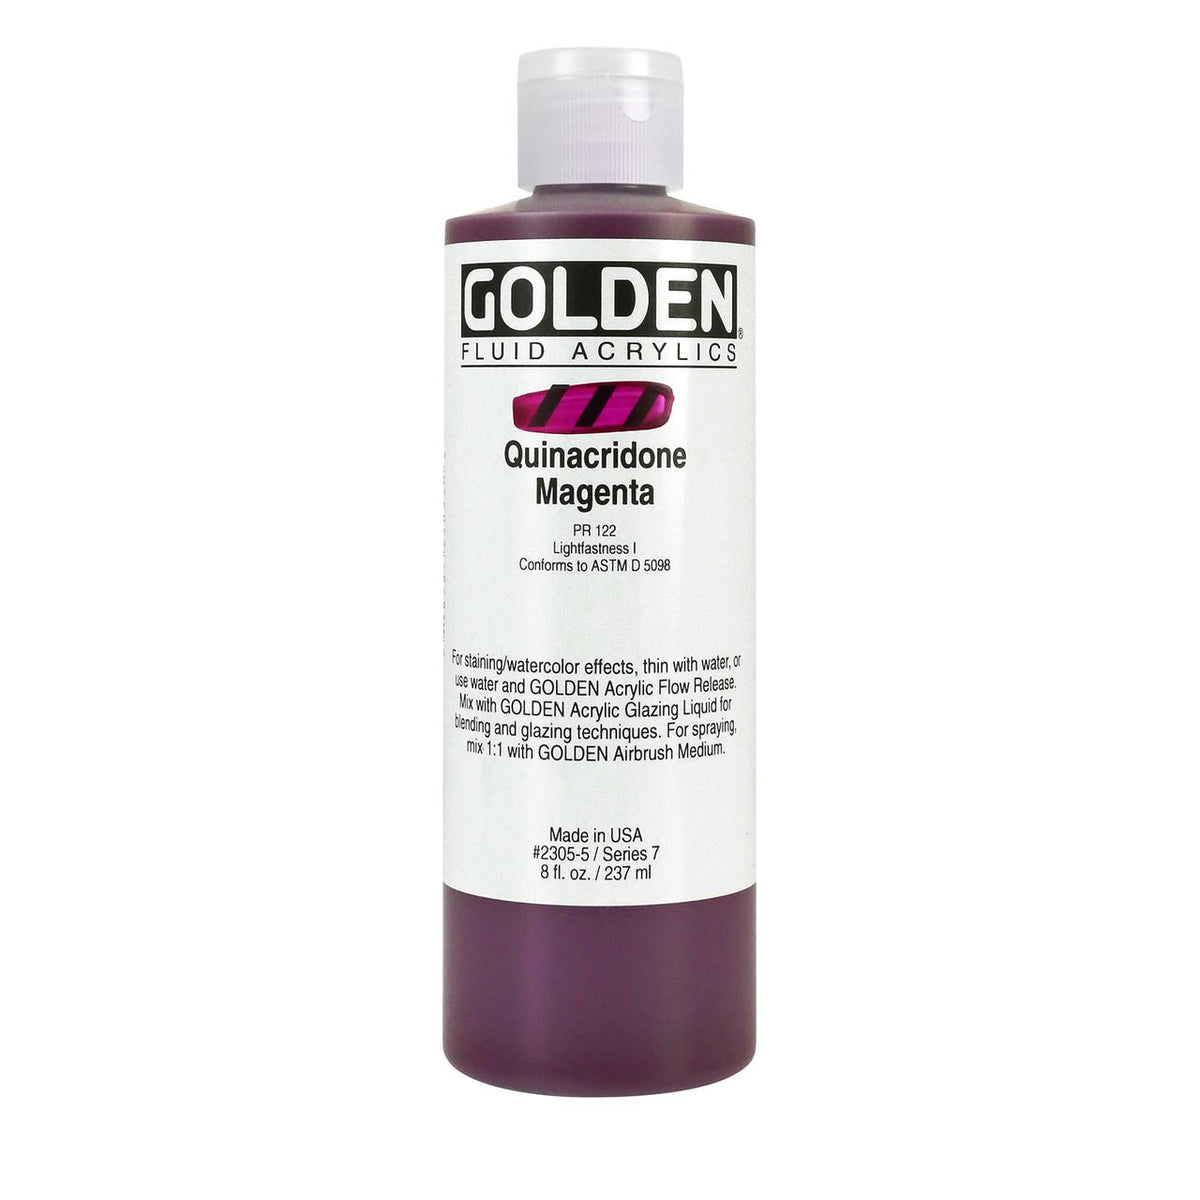 Golden Fluid Acrylic Quinacridone Magenta 8 oz - merriartist.com